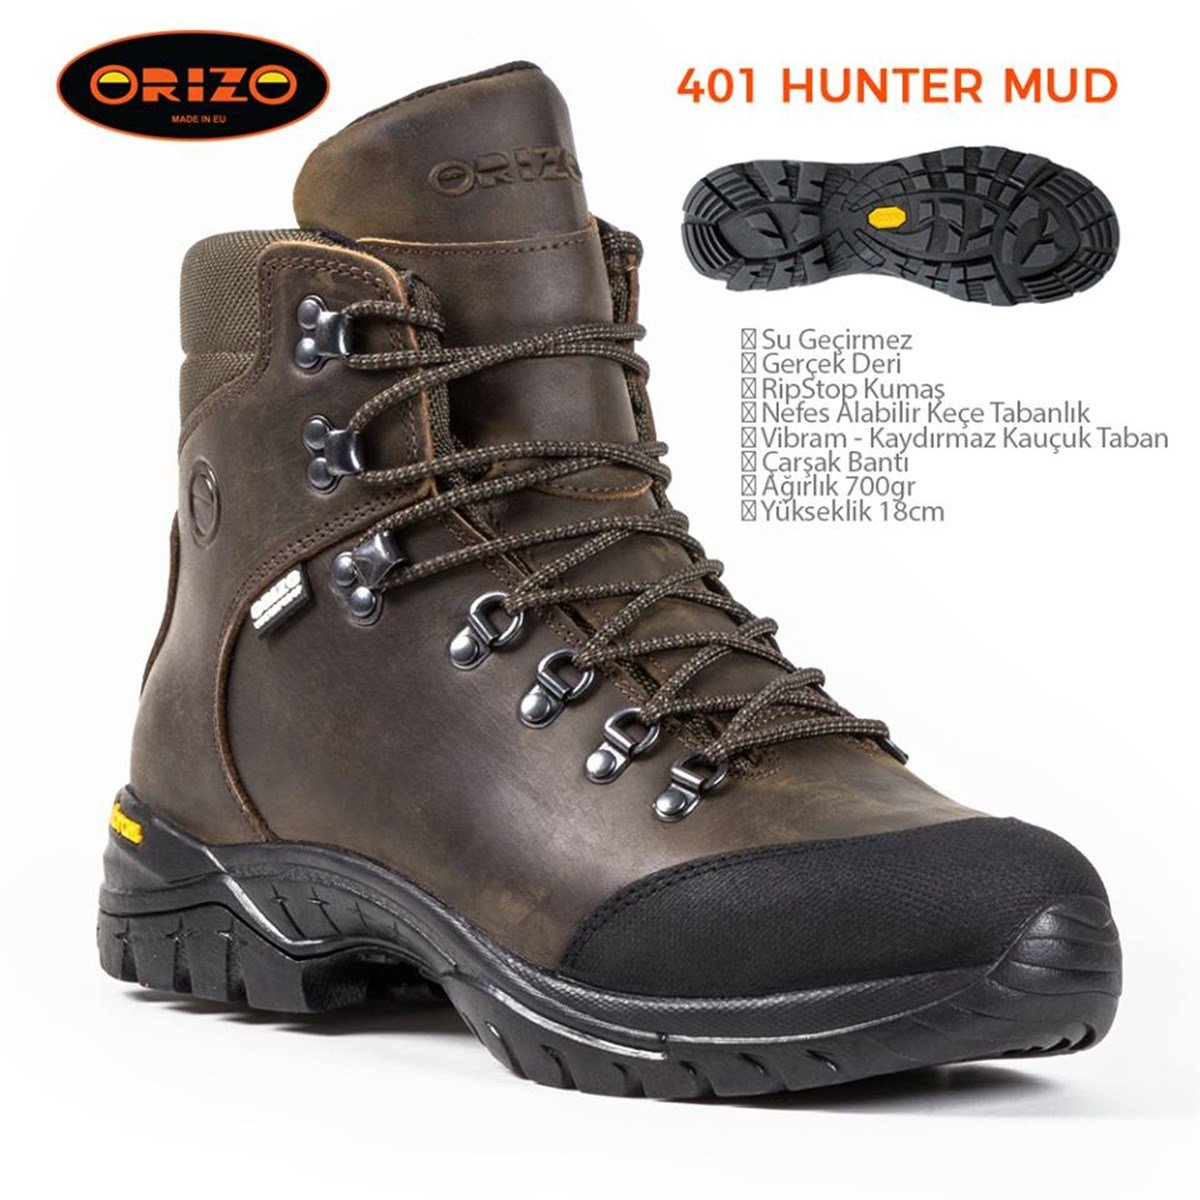 Orizo 401 Hunter Mud Bot